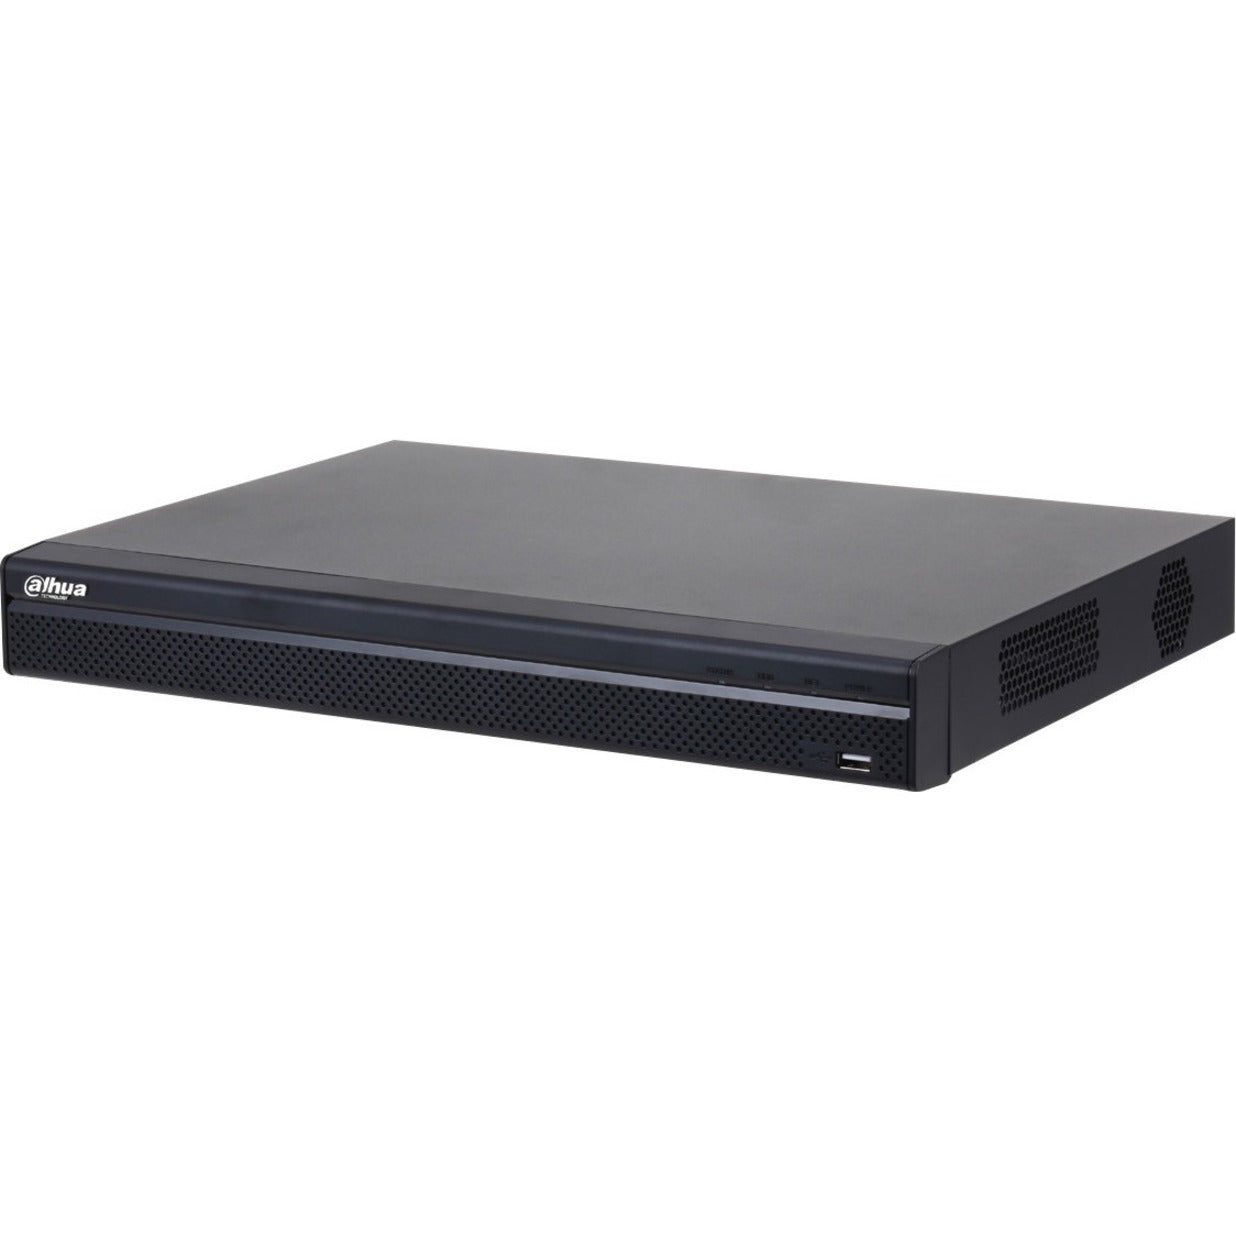 Dahua N42C2P 8-channel 1U 8 PoE 4K Network Video Recorder, No HDD